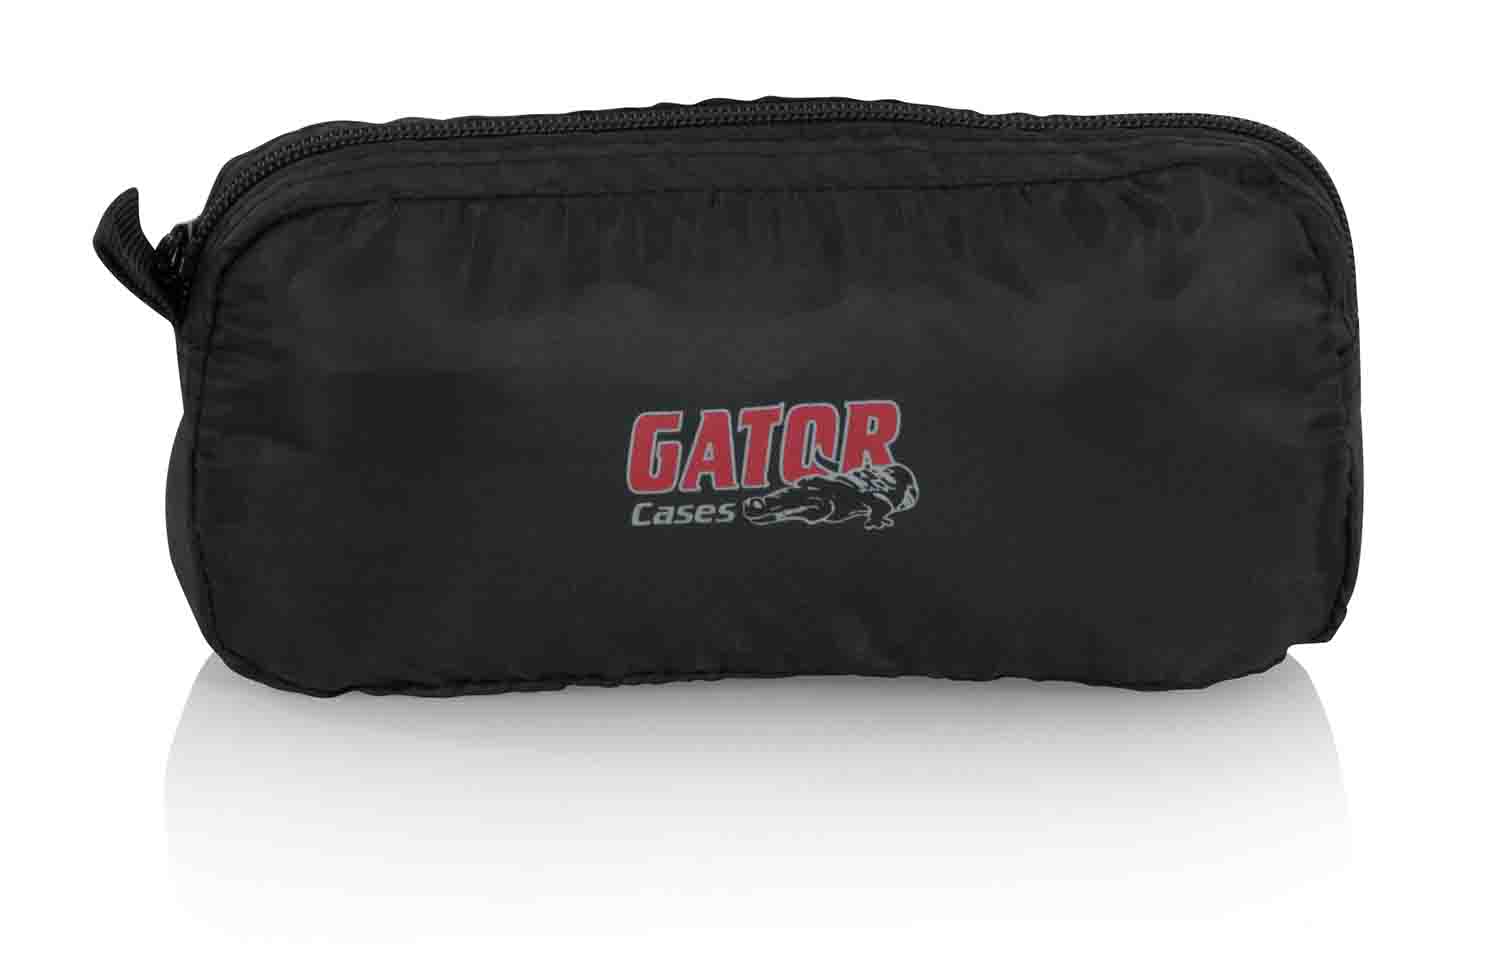 Gator Cases GPA-STRETCH-15-B Stretchy Speaker Cover 15″ - Black - Hollywood DJ